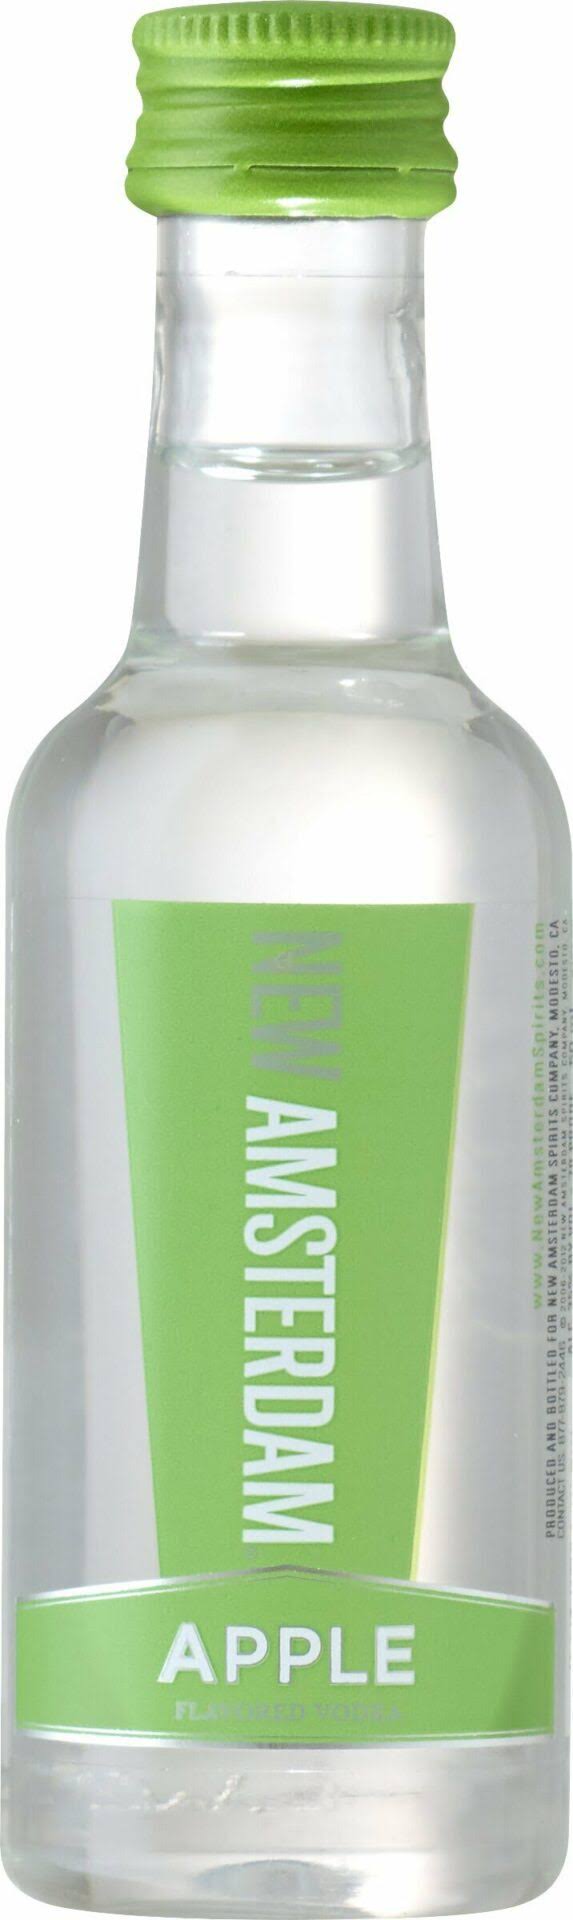 New Amsterdam - Apple Vodka (50ml)